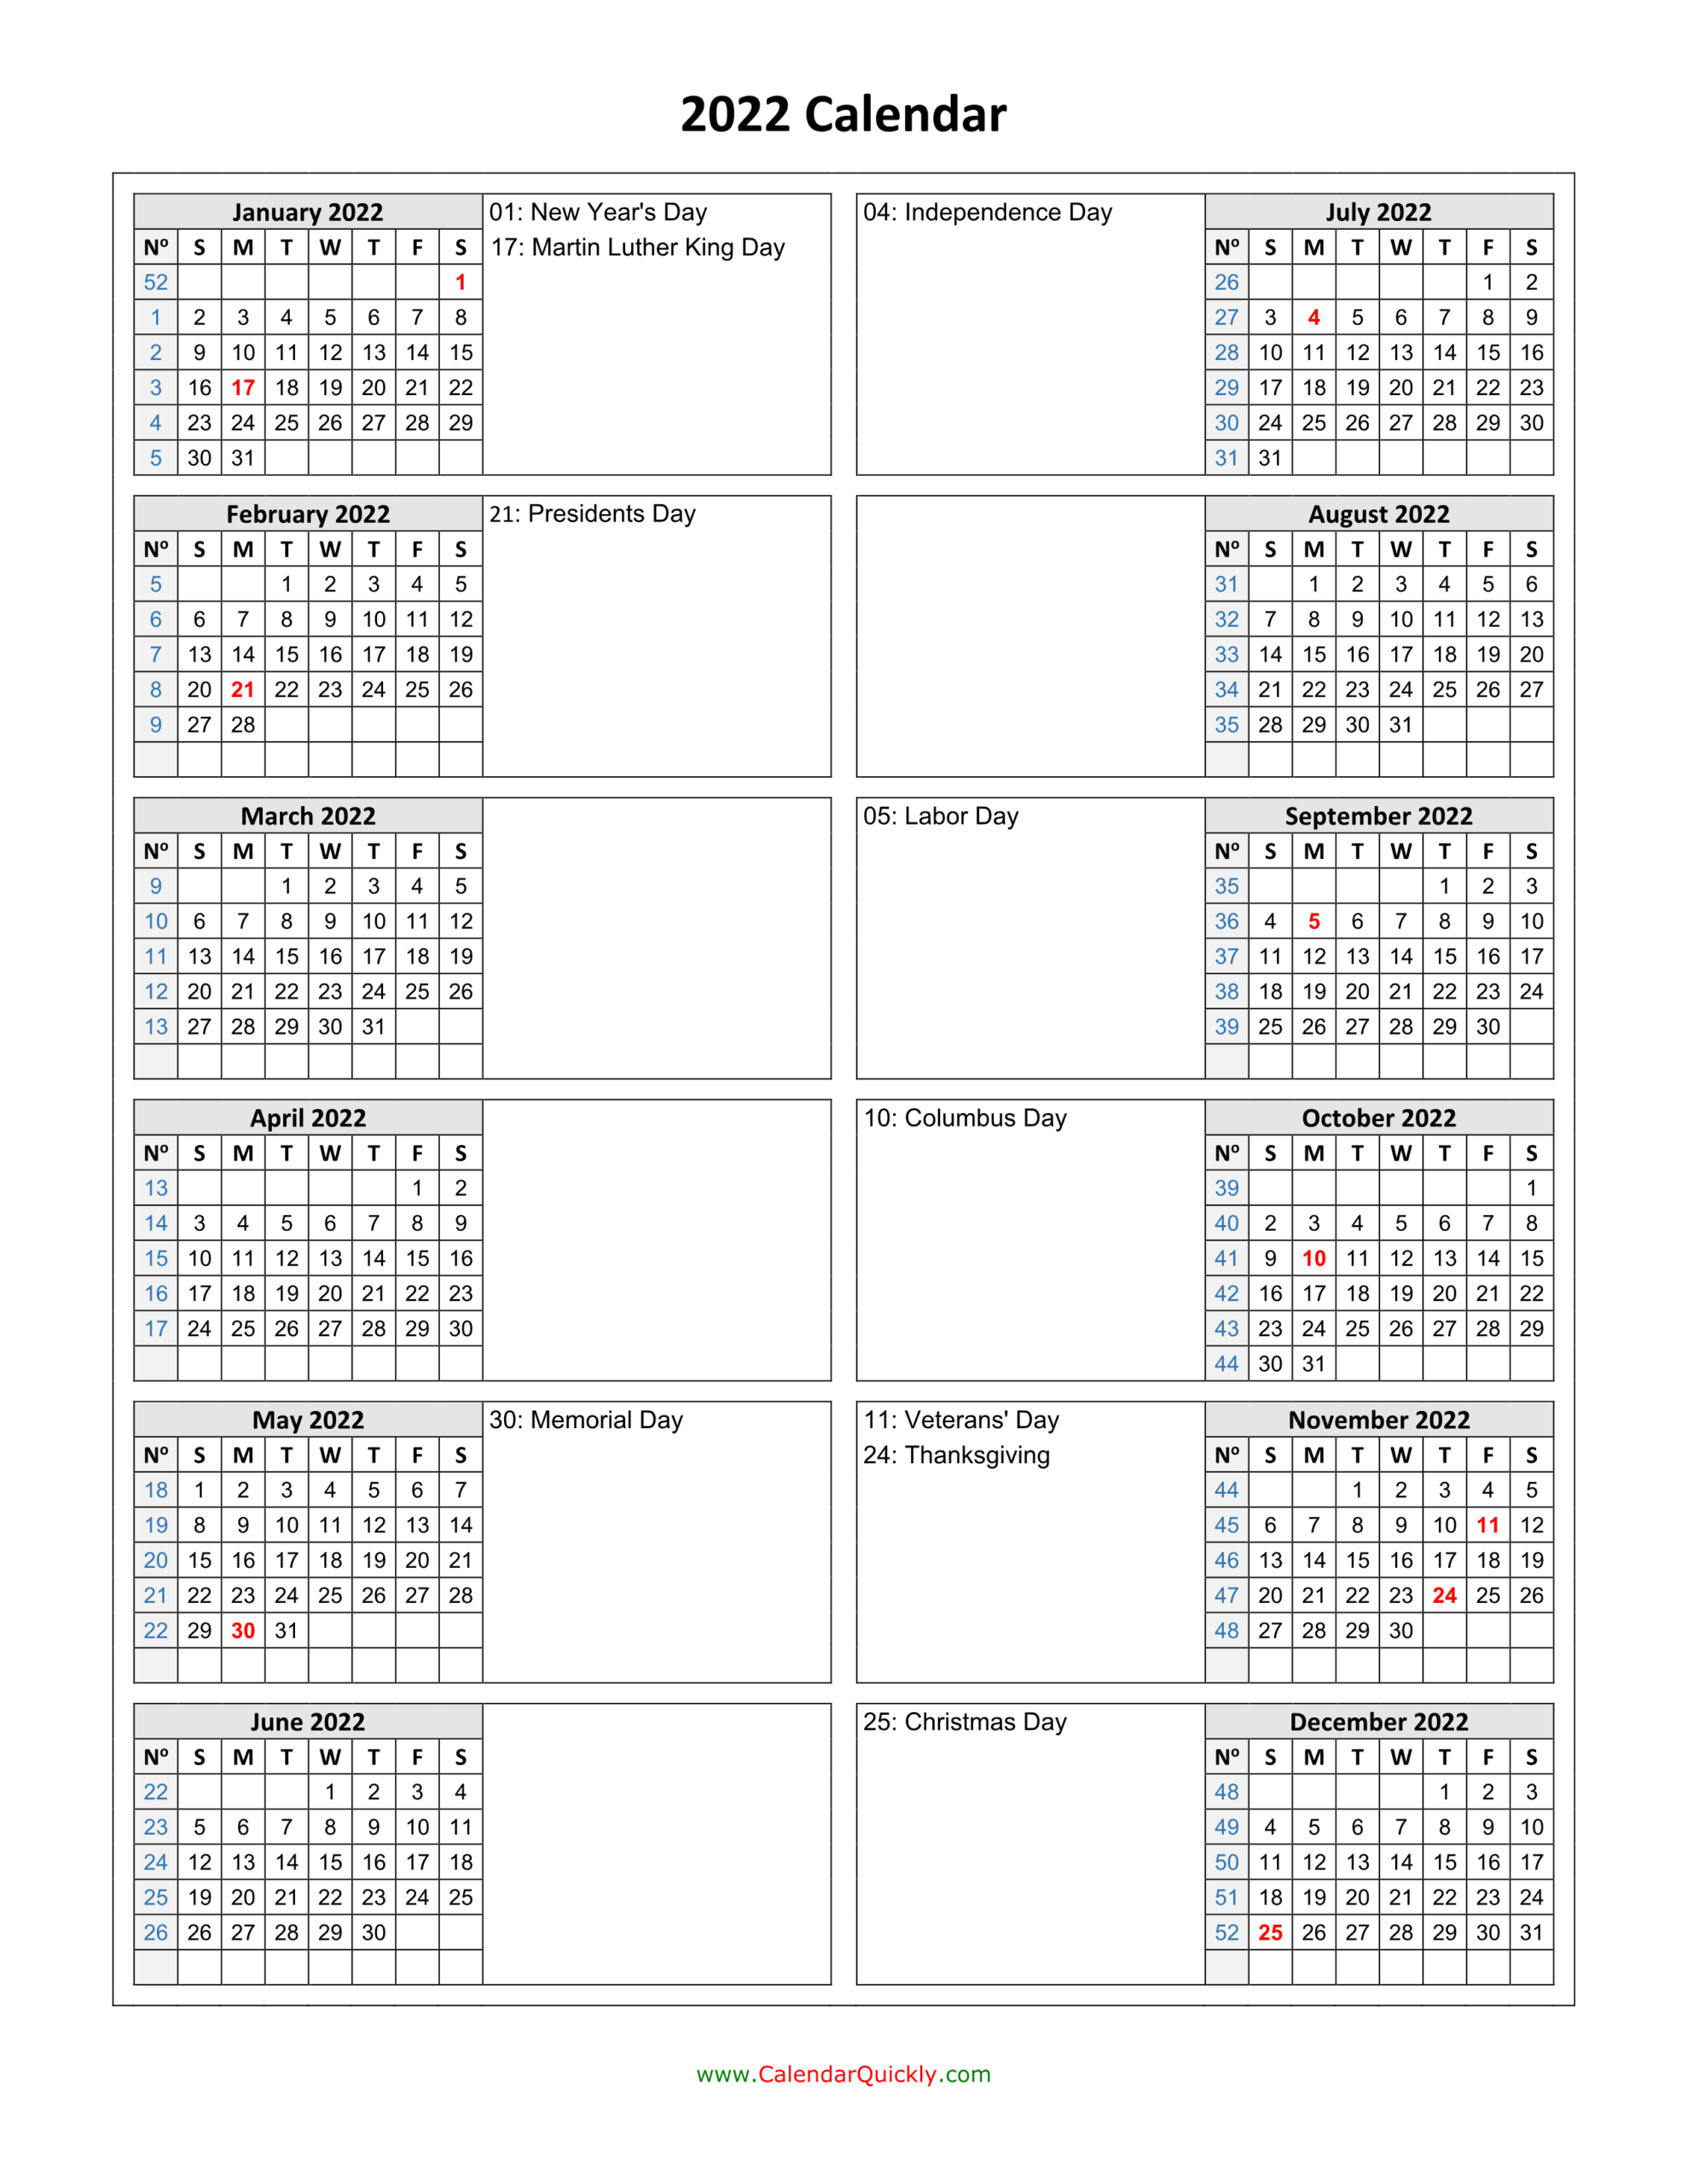 Holidays Calendar 2022 Vertical | Calendar Quickly  2022 Printable Calendar One Page Per Month